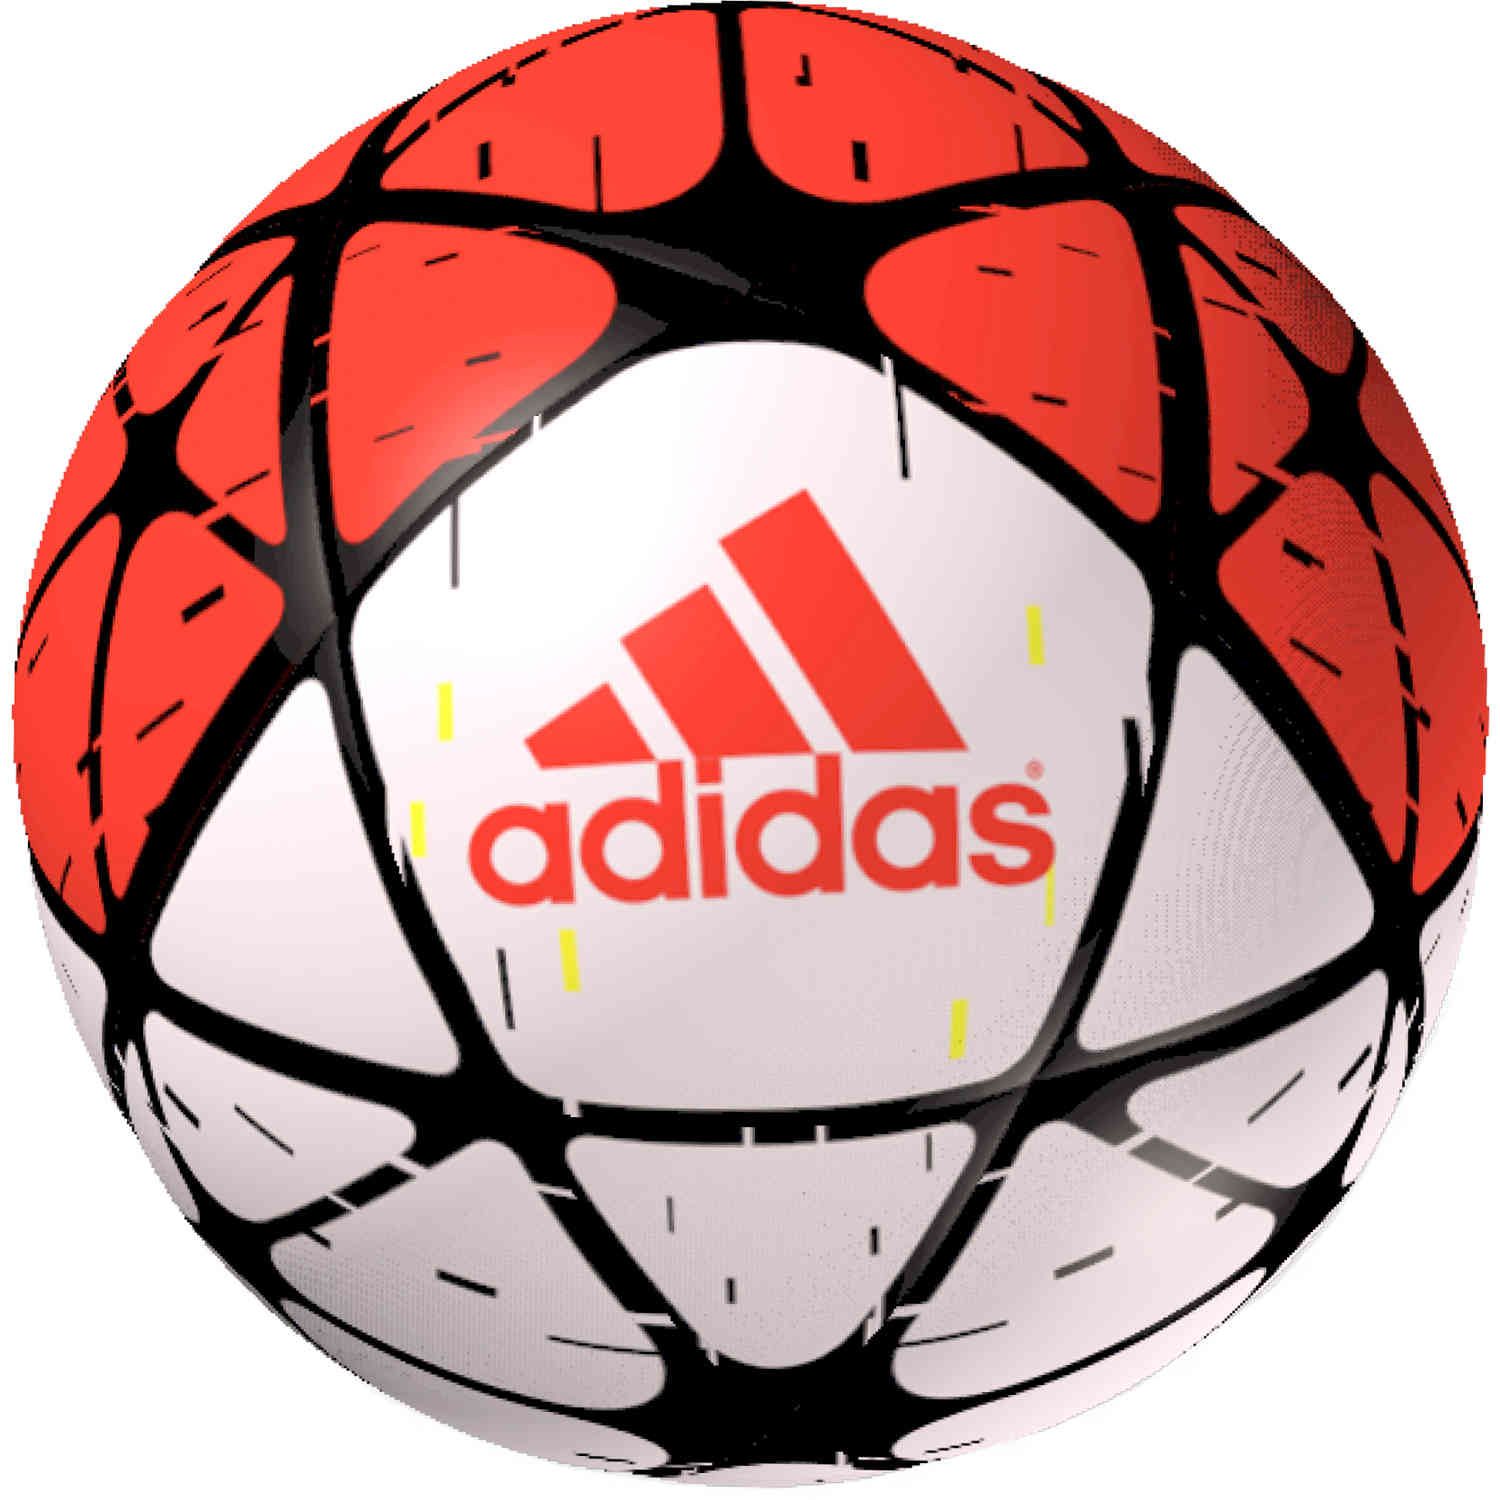 adidas messi glider soccer ball